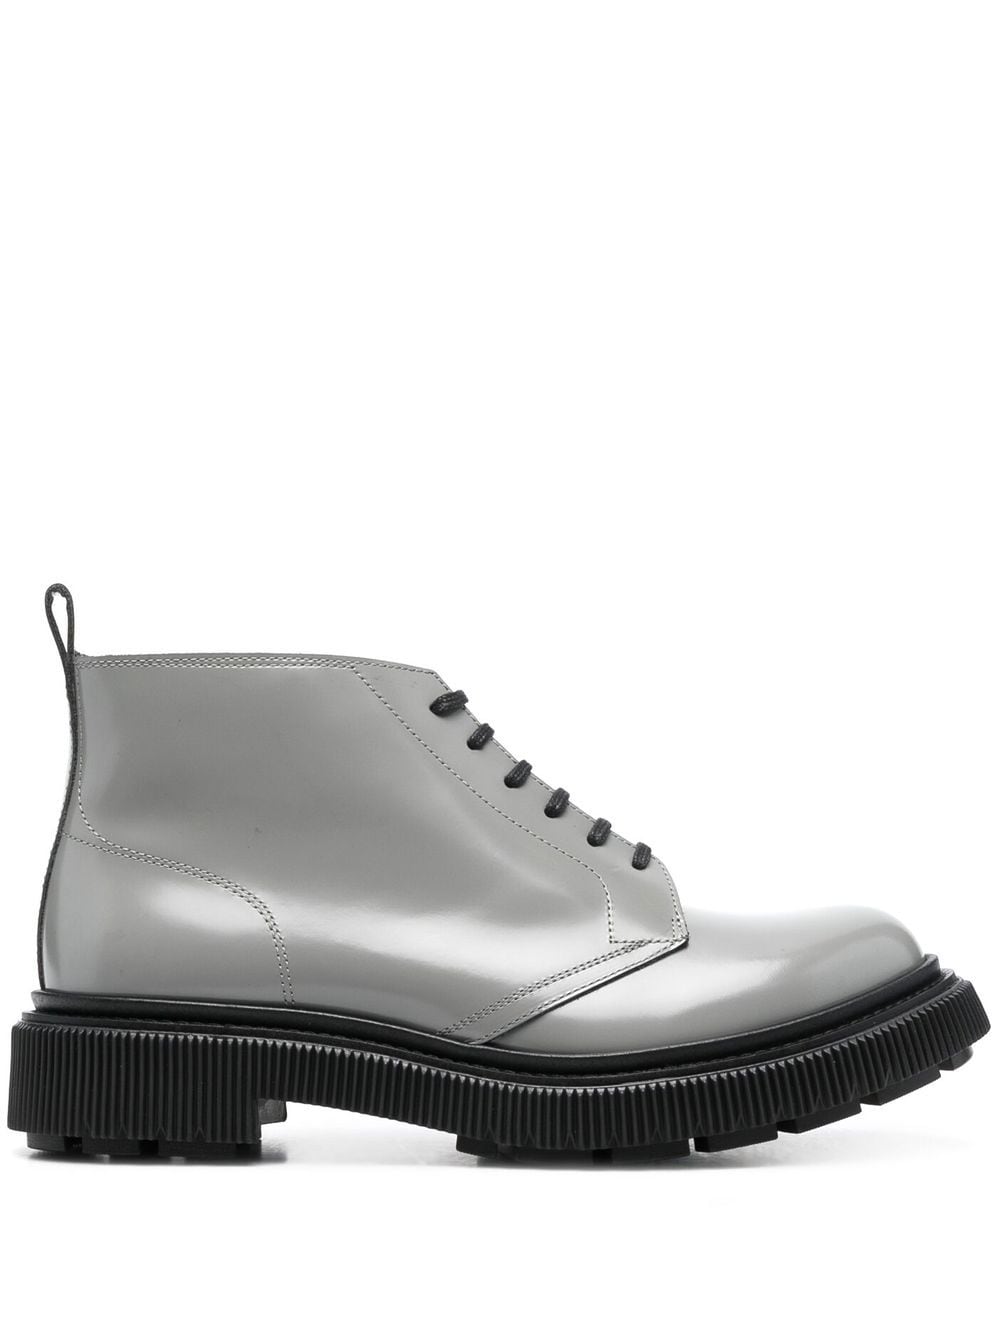 Adieu Paris Type 121 leather ankle boots